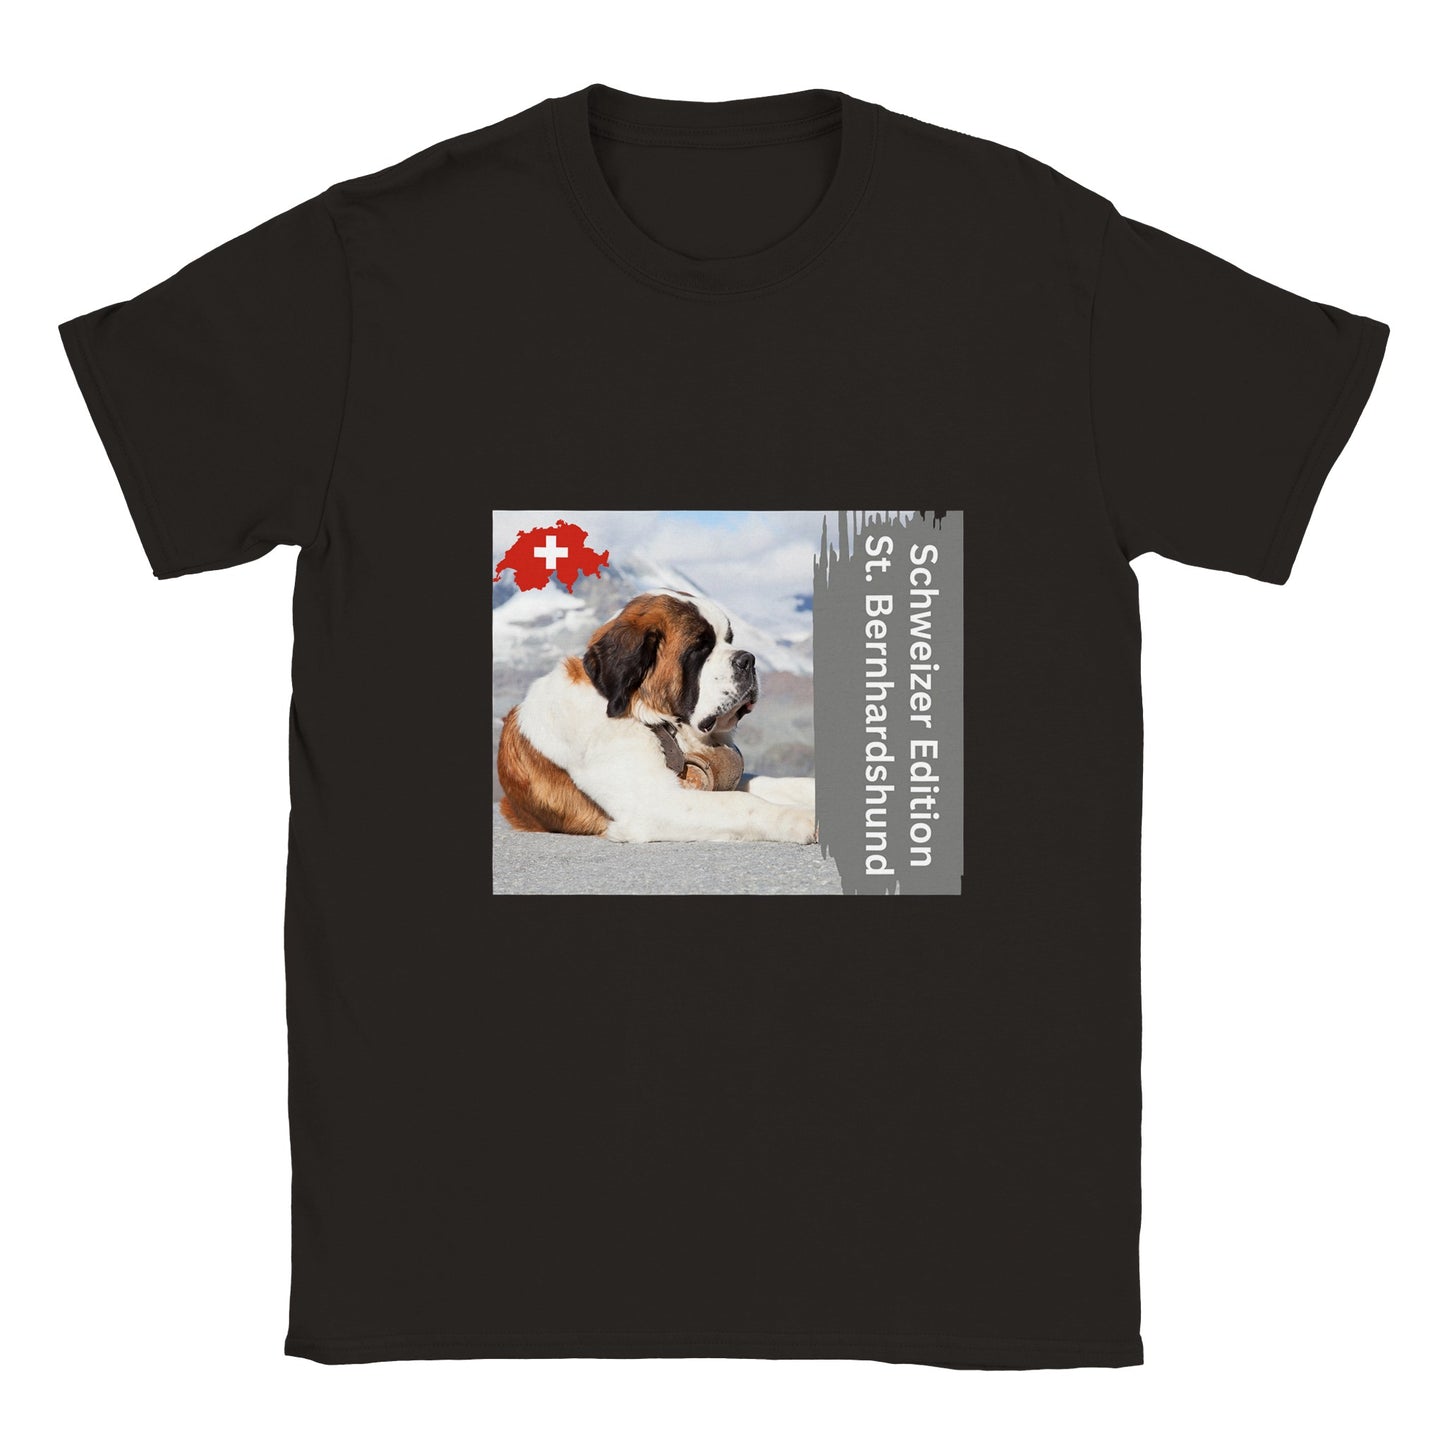 Swiss Edition Children's T-Shirt